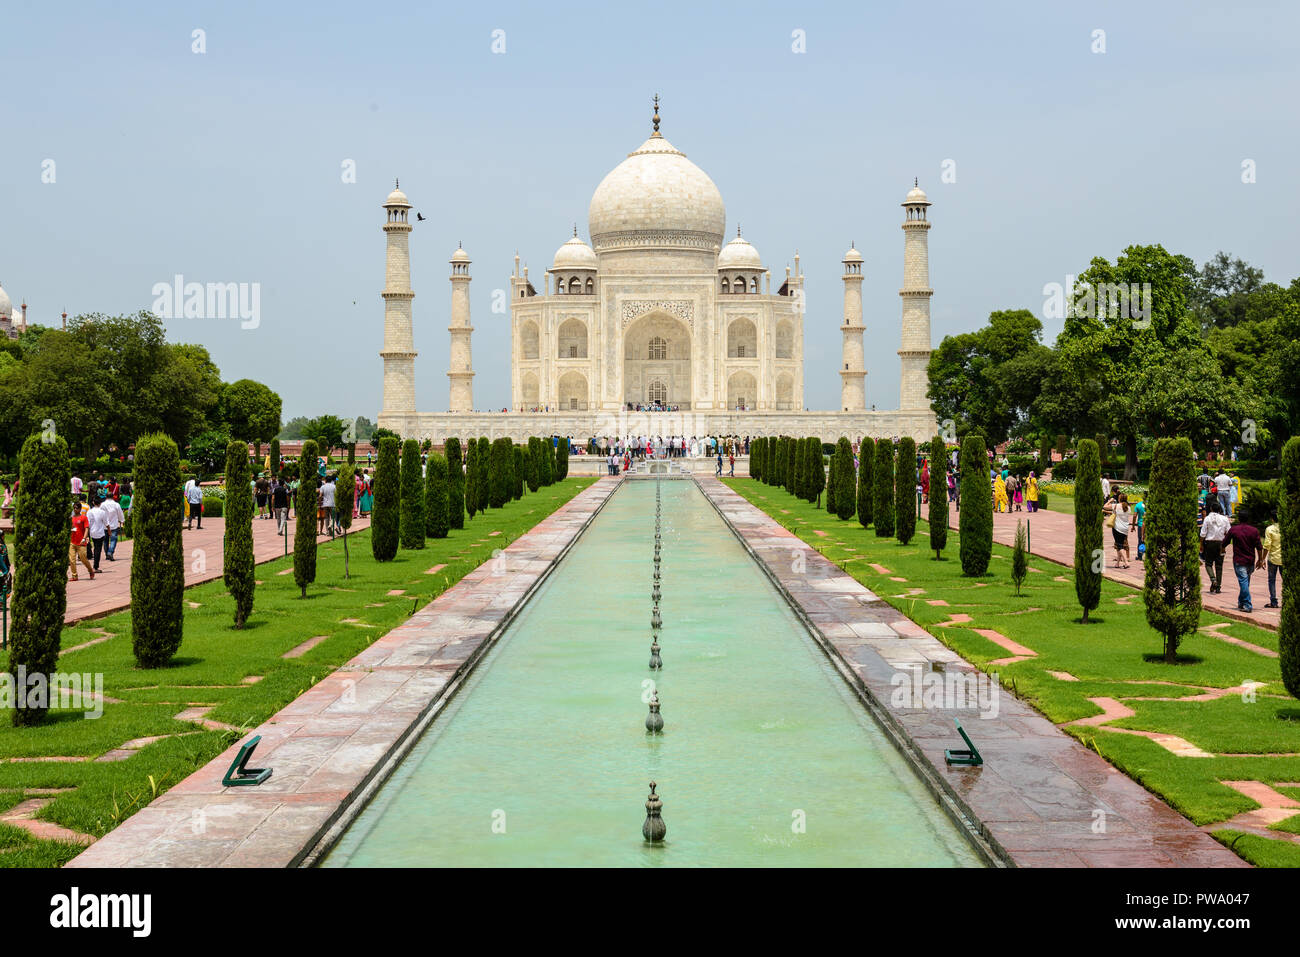 Taj Mahal in Agra, India - one of the UNESCO world heriatge sites Stock Photo